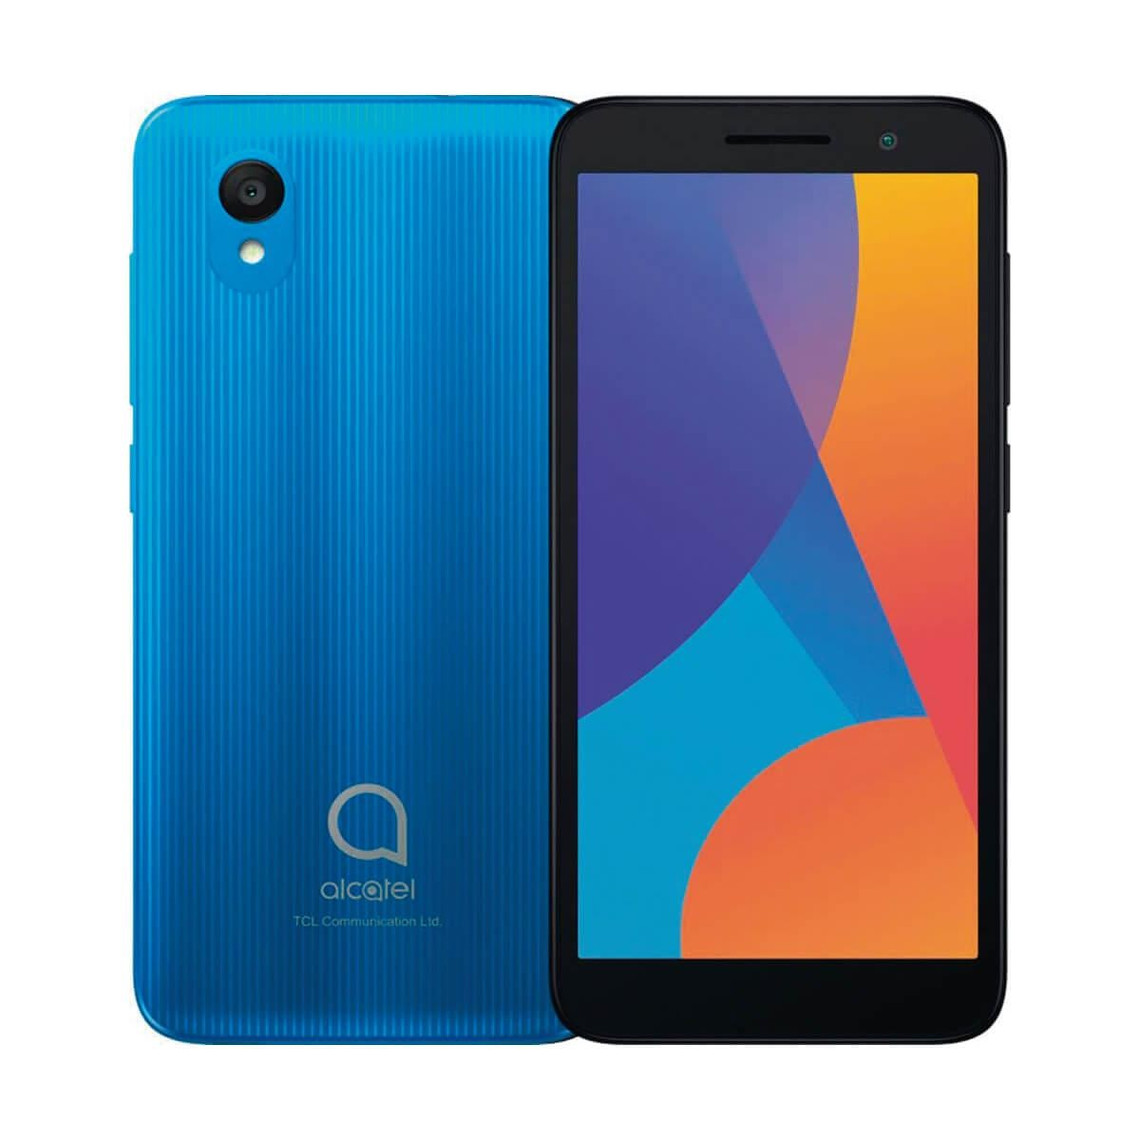 Smartphone Android Alcatel Alcatel 1 (2021) 1 Go/16 Go Bleu (Aqua Blue) Double SIM 5033FR